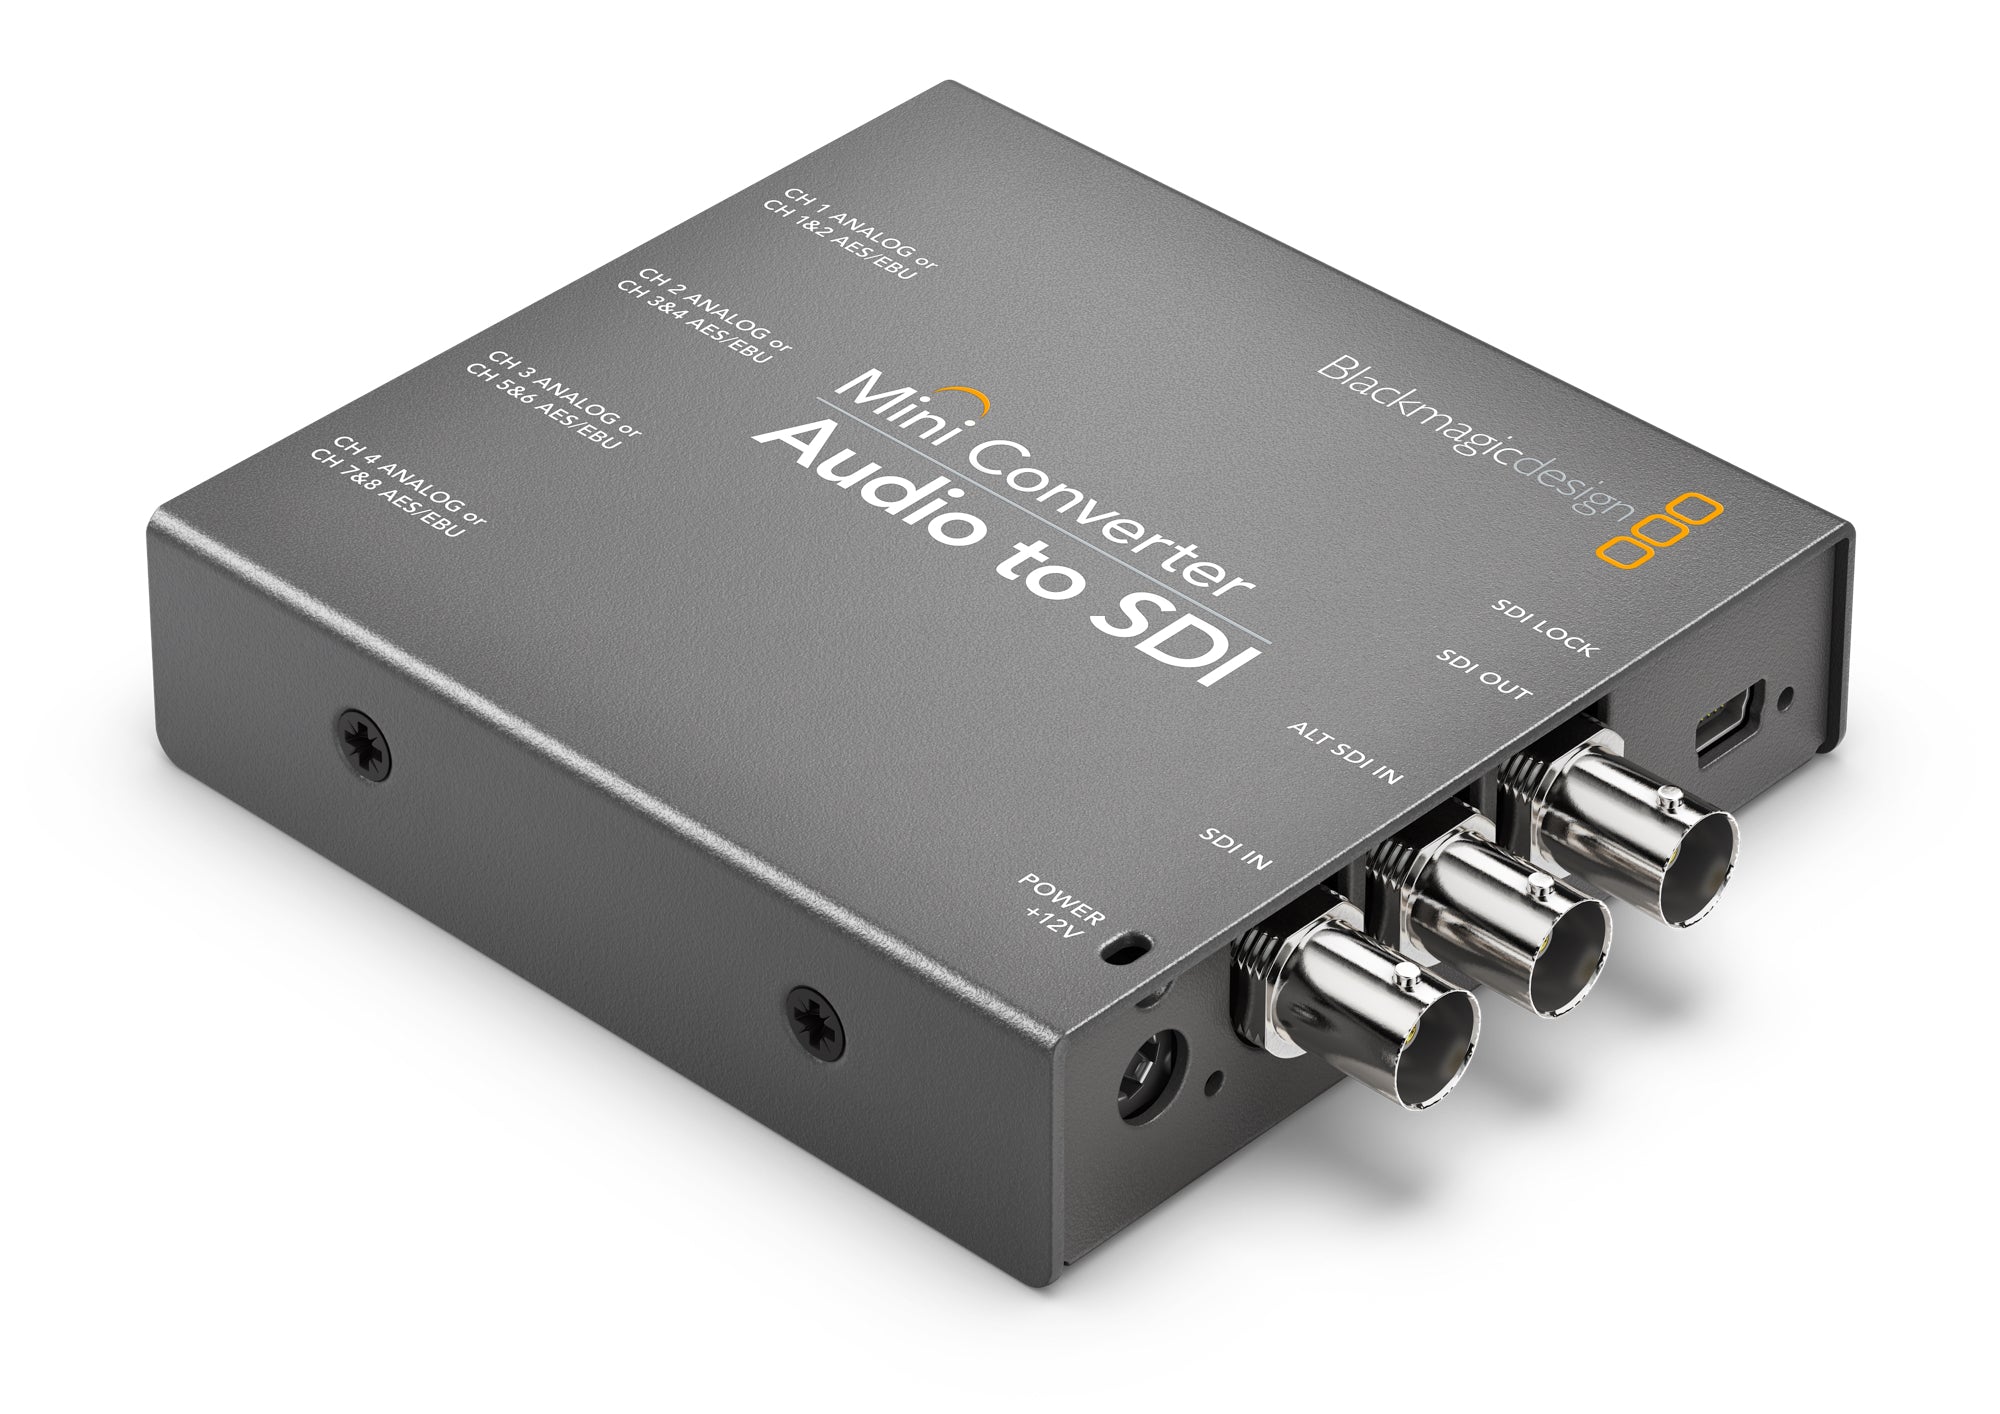 Overview of Blackmagic Design Mini Converter - Audio to SDI